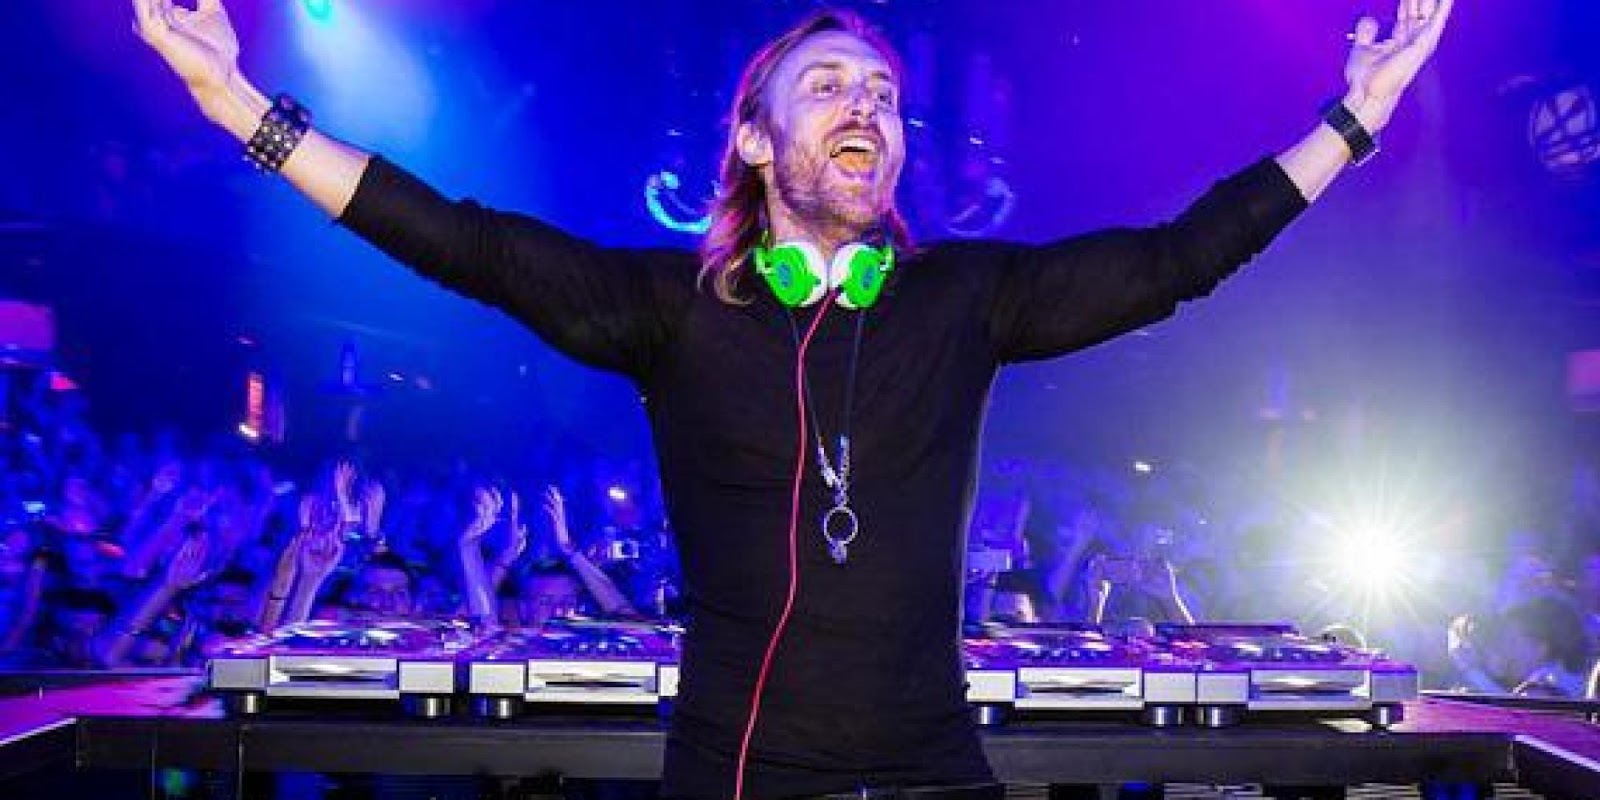 David Guetta EDM electronica